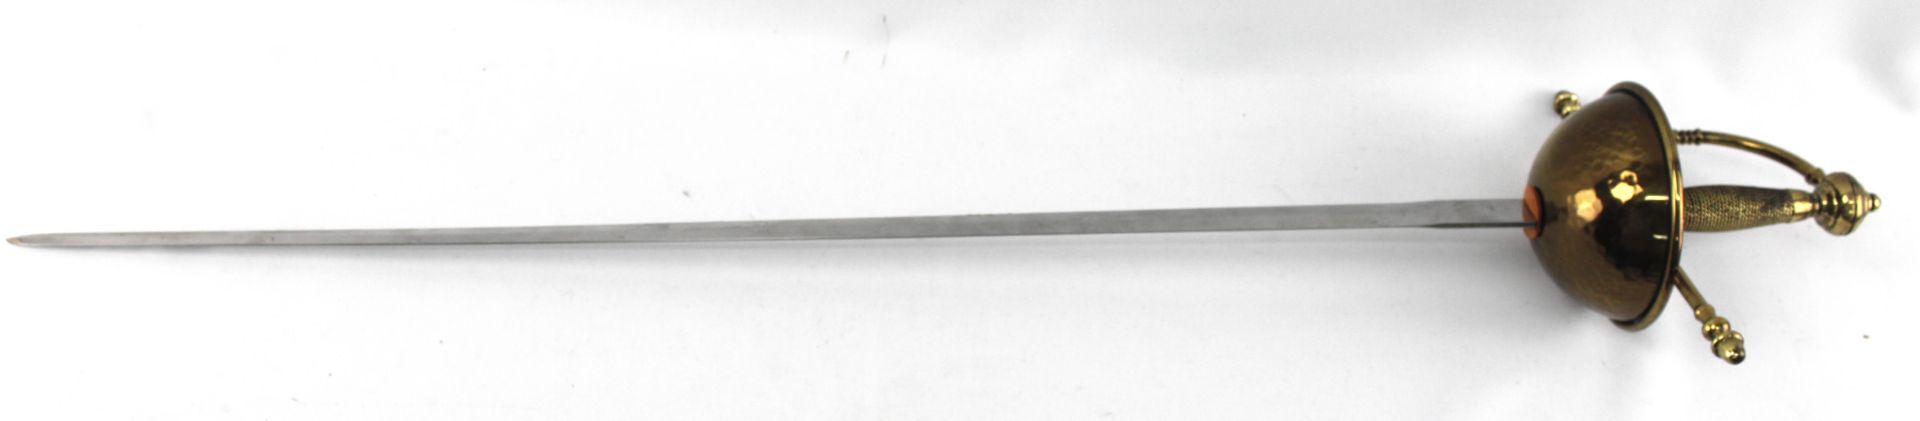 Spanisches Tizona-Schwert Reproduktionsschwert